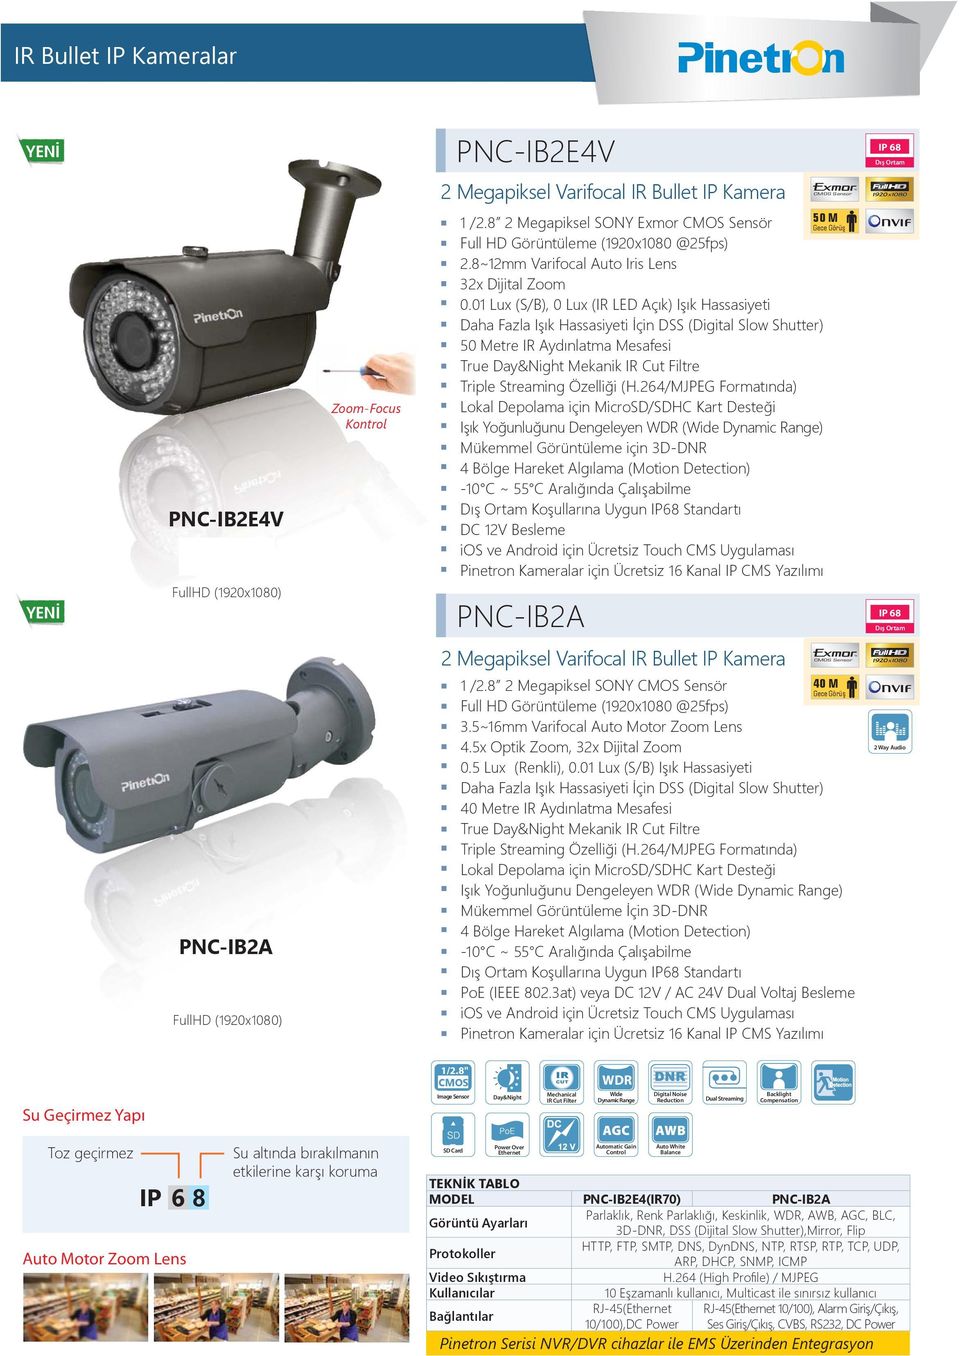 Standartı DC 12V Besleme PNC-IB2A IP 68 2 Megapiksel Varifocal Bullet IP Kamera PNC-IB2A 1560 $ 1 /2.8 2 Megapiksel SONY Sensör 40 M 3.5~16mm Varifocal Auto Motor Zoom Lens 4.5x Optik Zoom, 0.